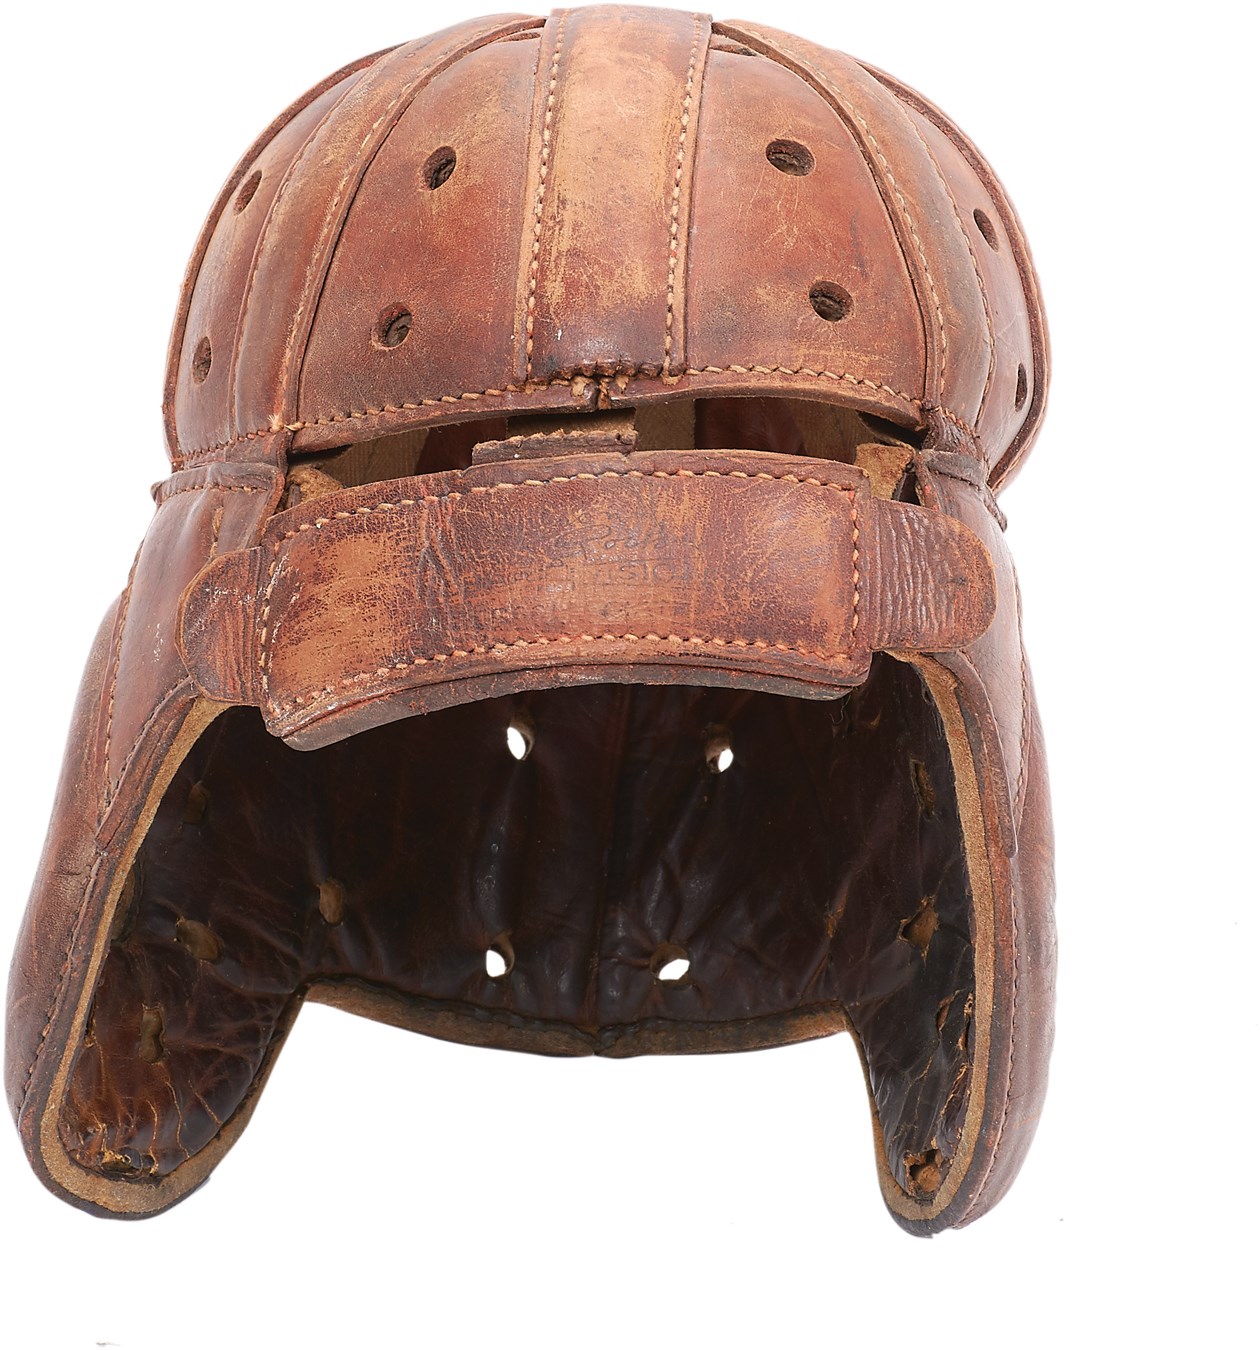 Antique Sporting Goods - 1920s Knute Rockne Endorsed Wilson Helmet